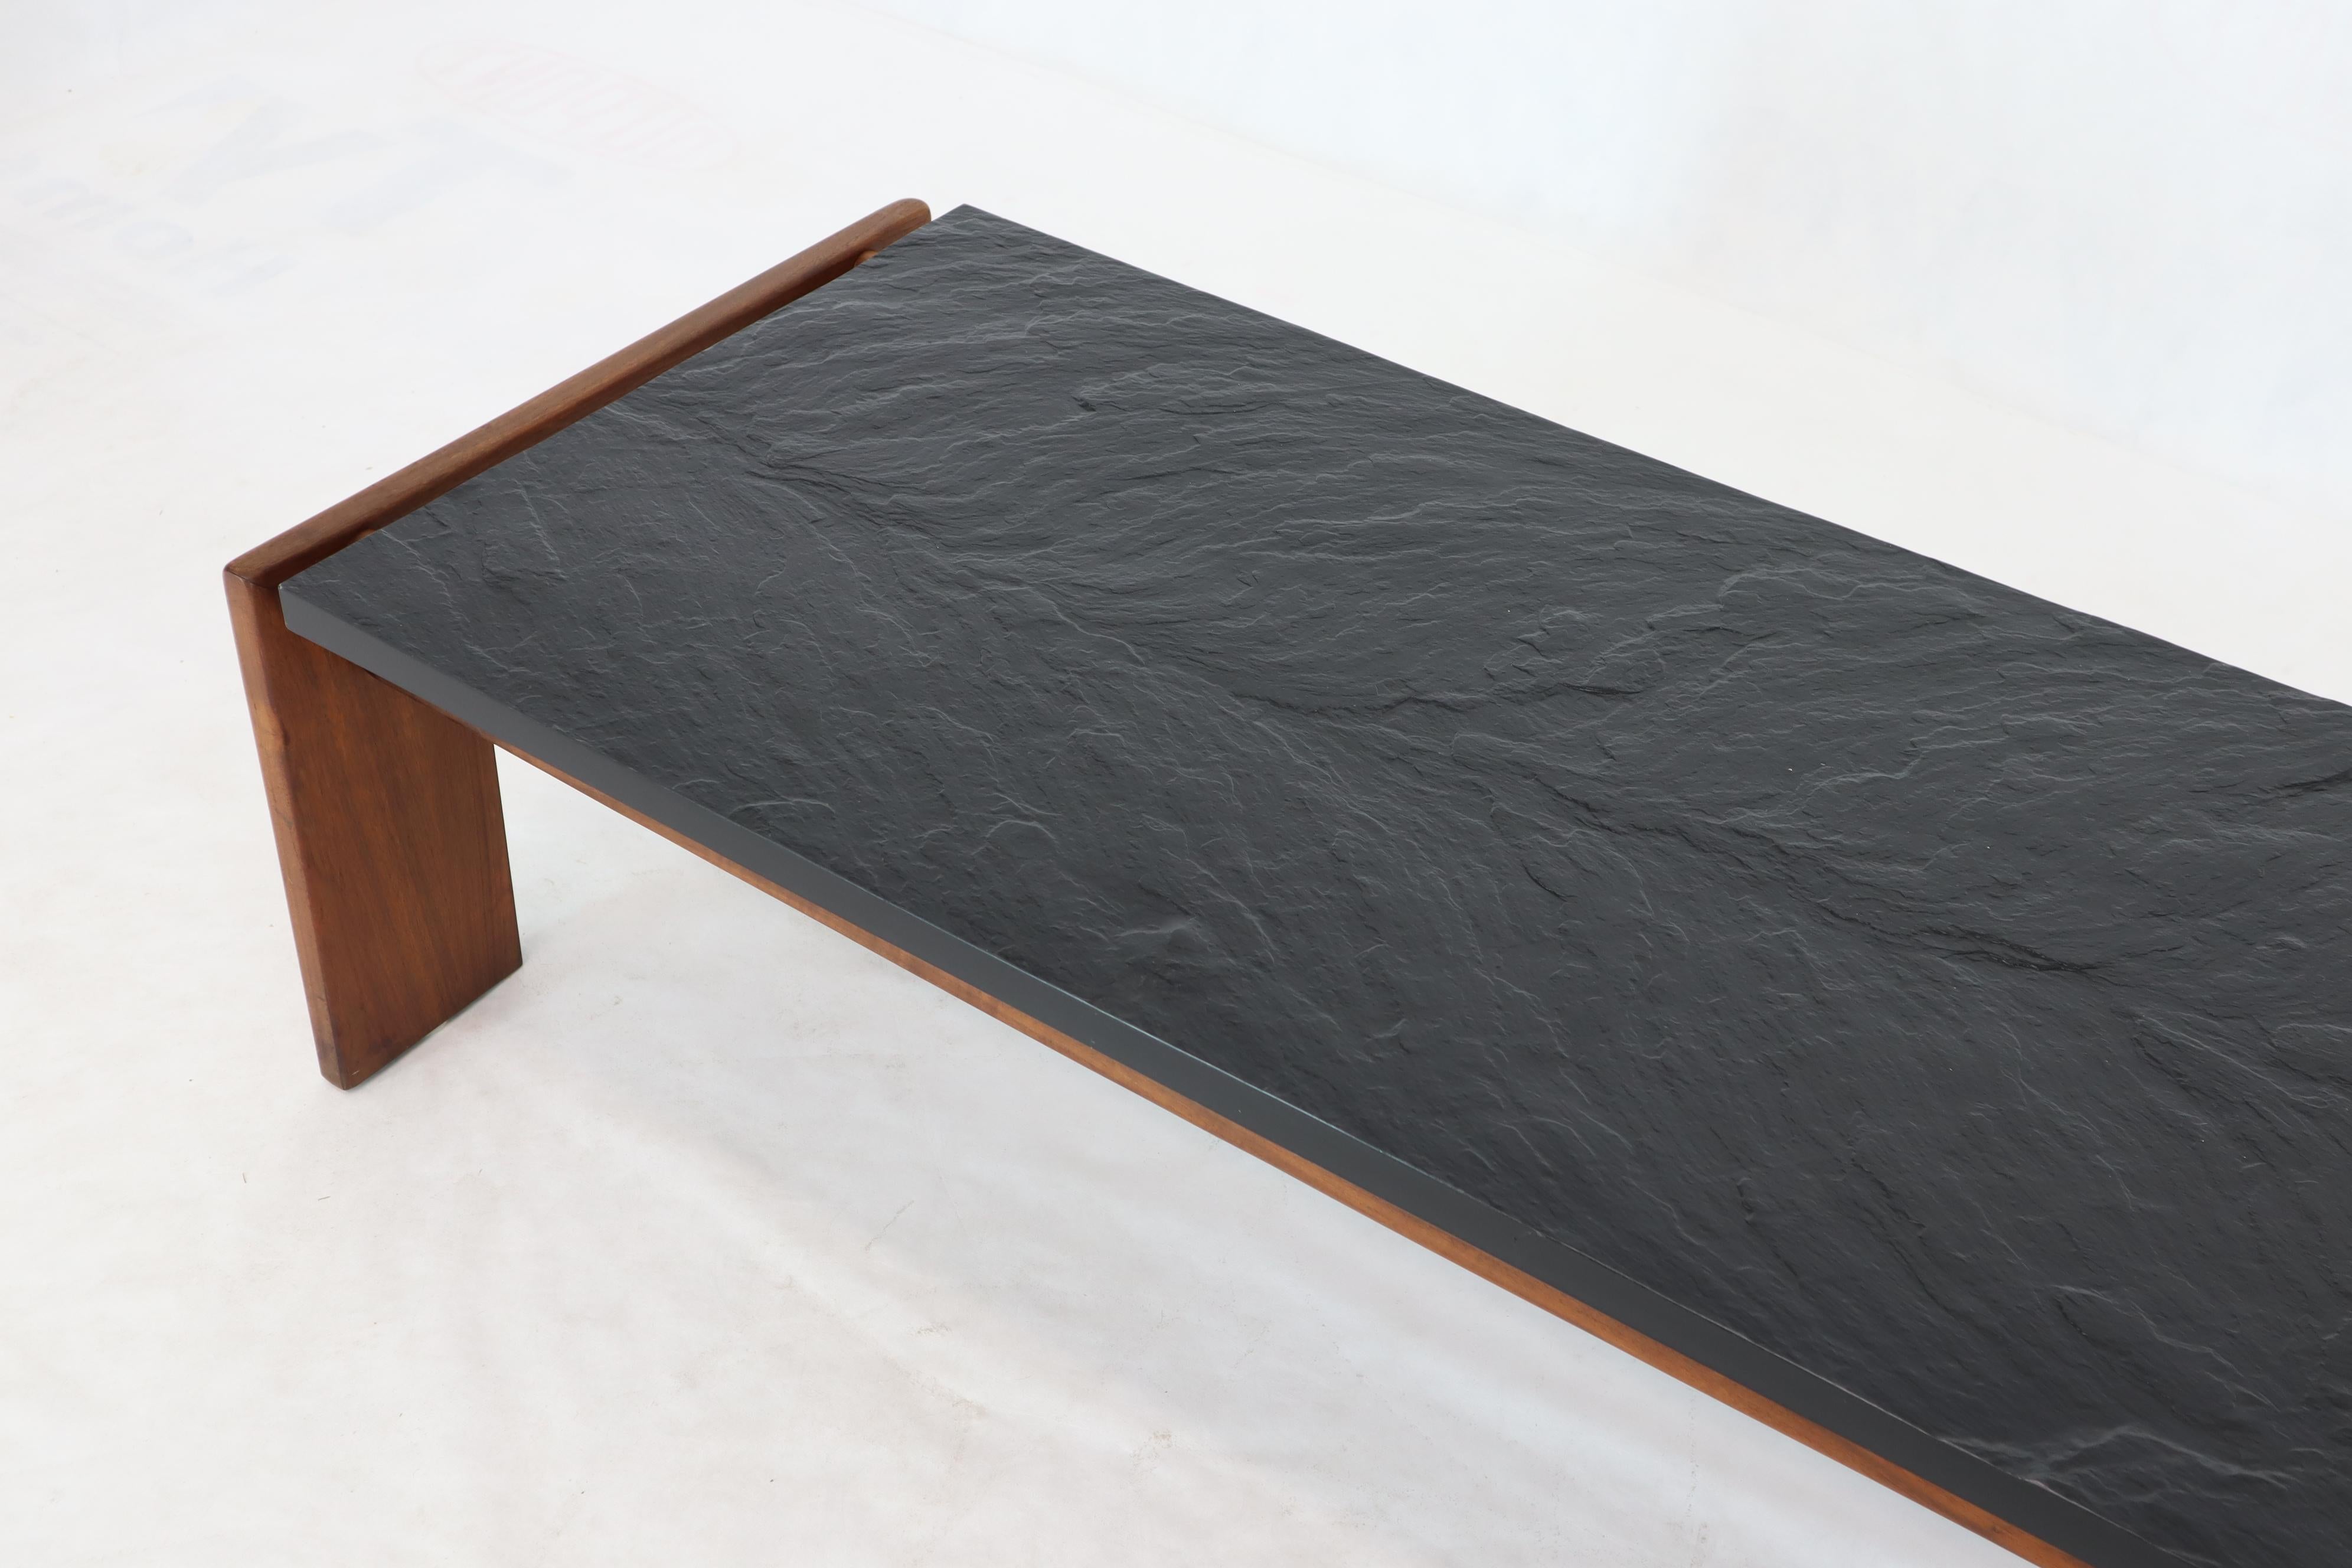 American Crafts Associates Adrian Pearsall  Walnut Frame Slate Top Coffee Table